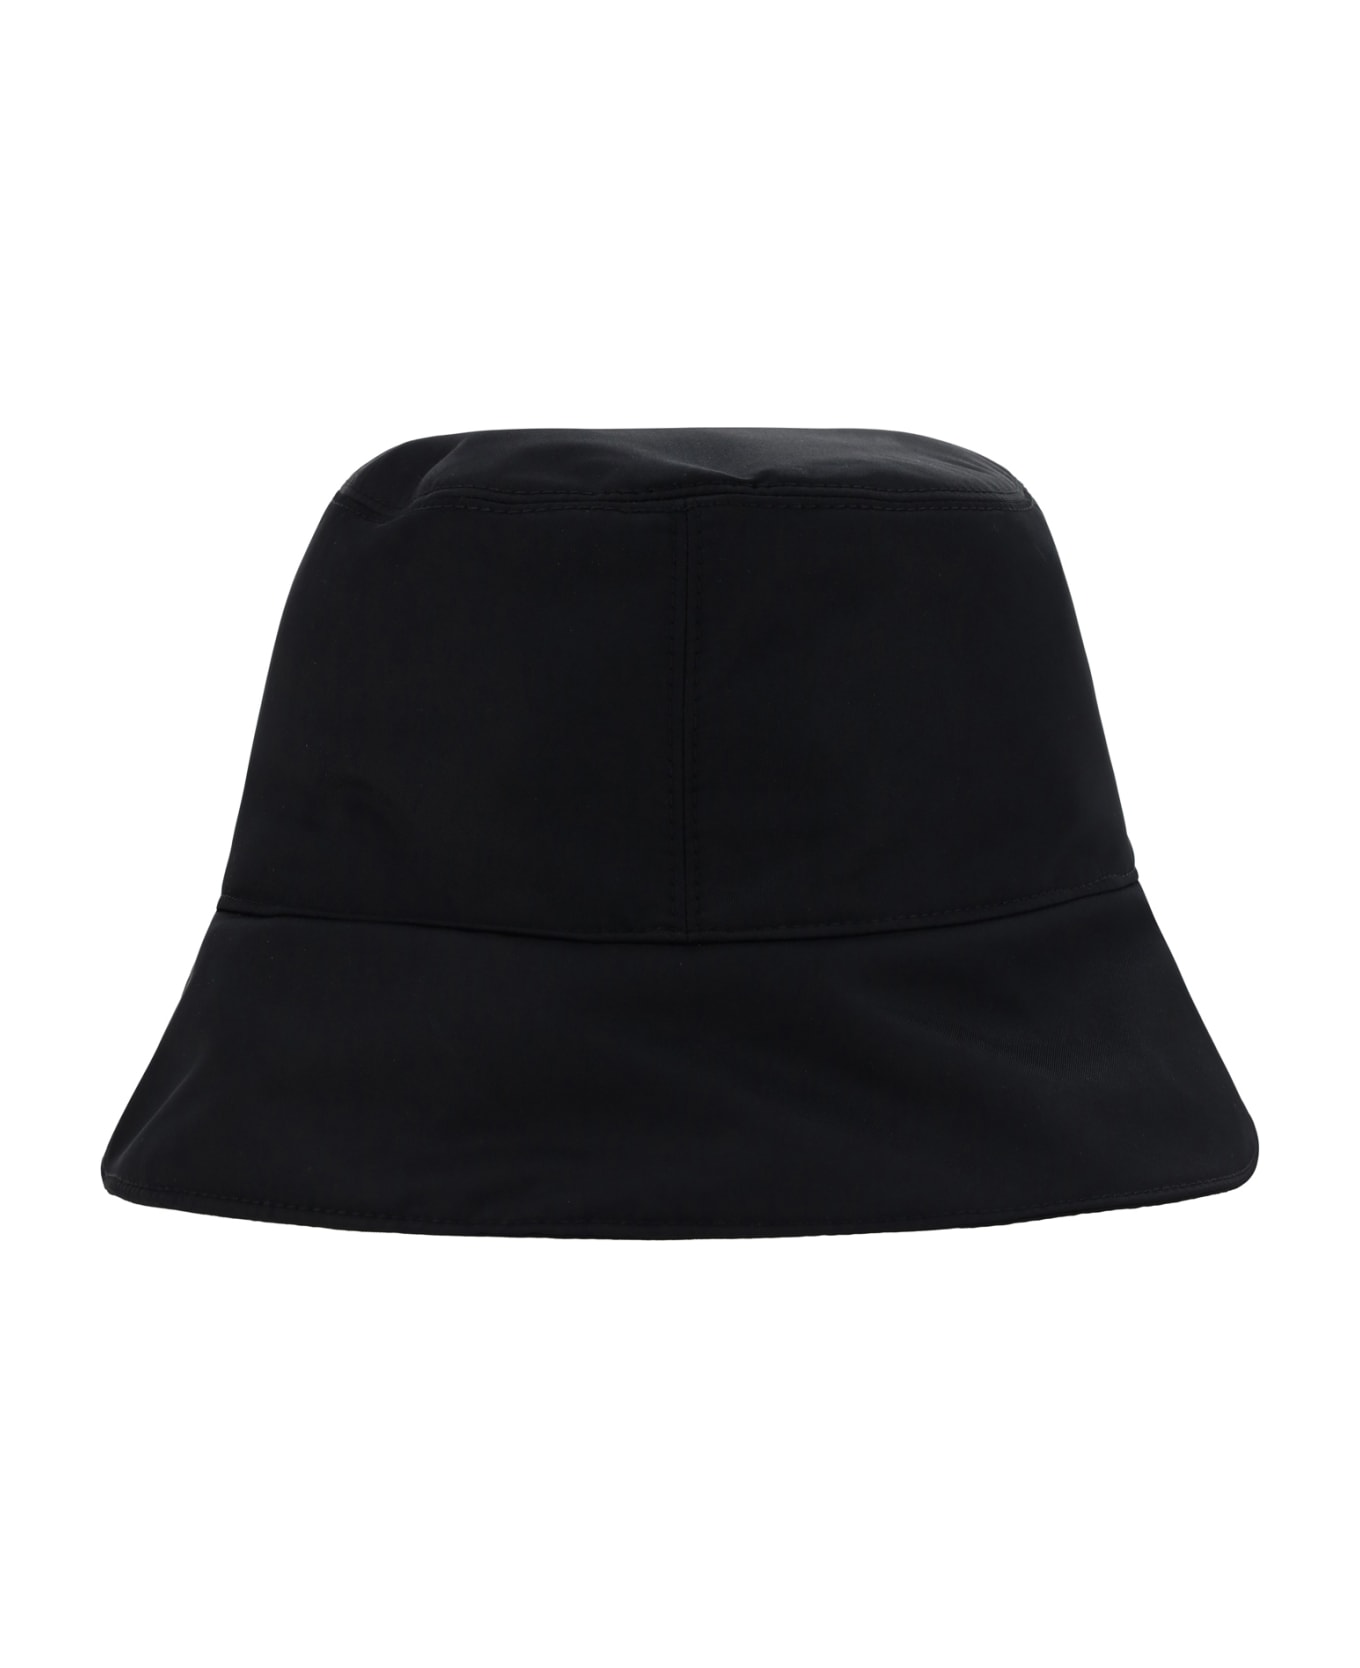 Off-White Bucket Hat - Black White 帽子